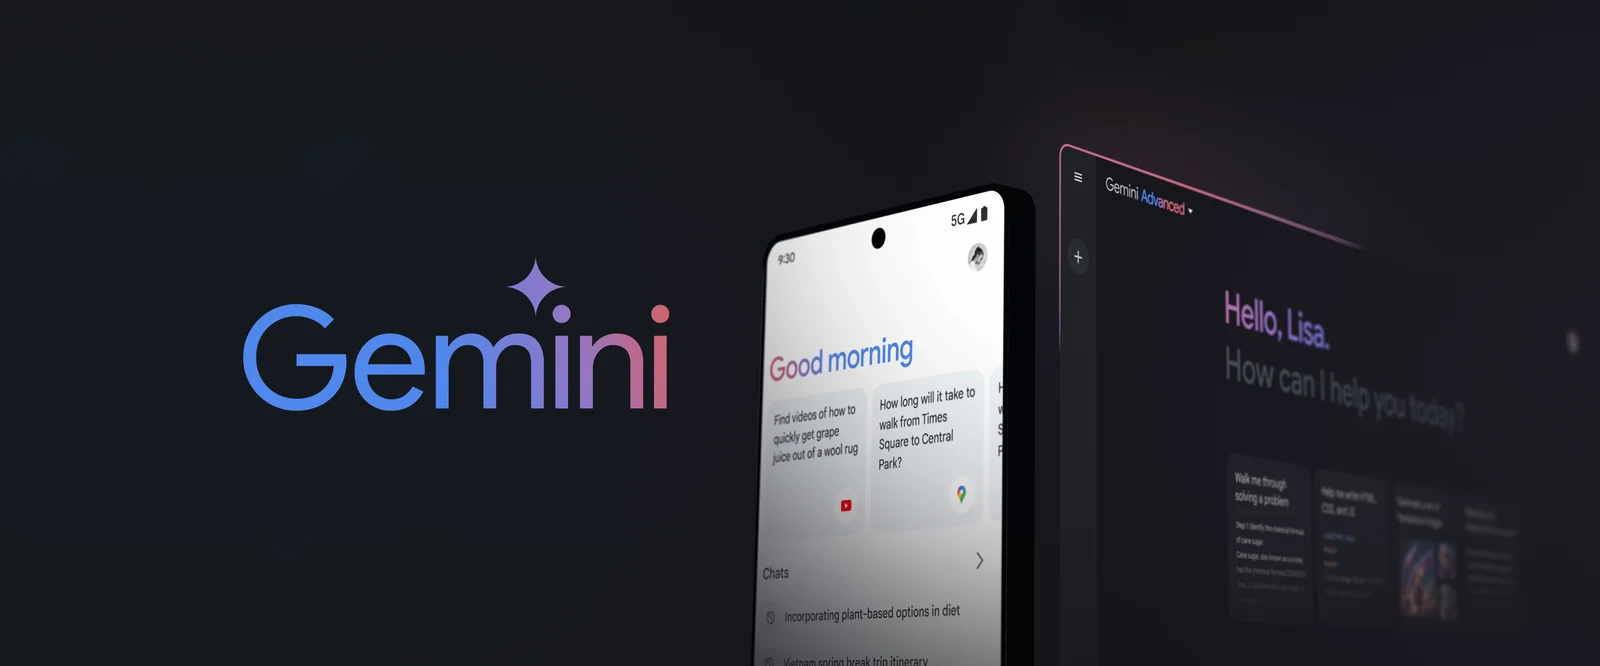 Screens of the new Google Gemini chatbot app